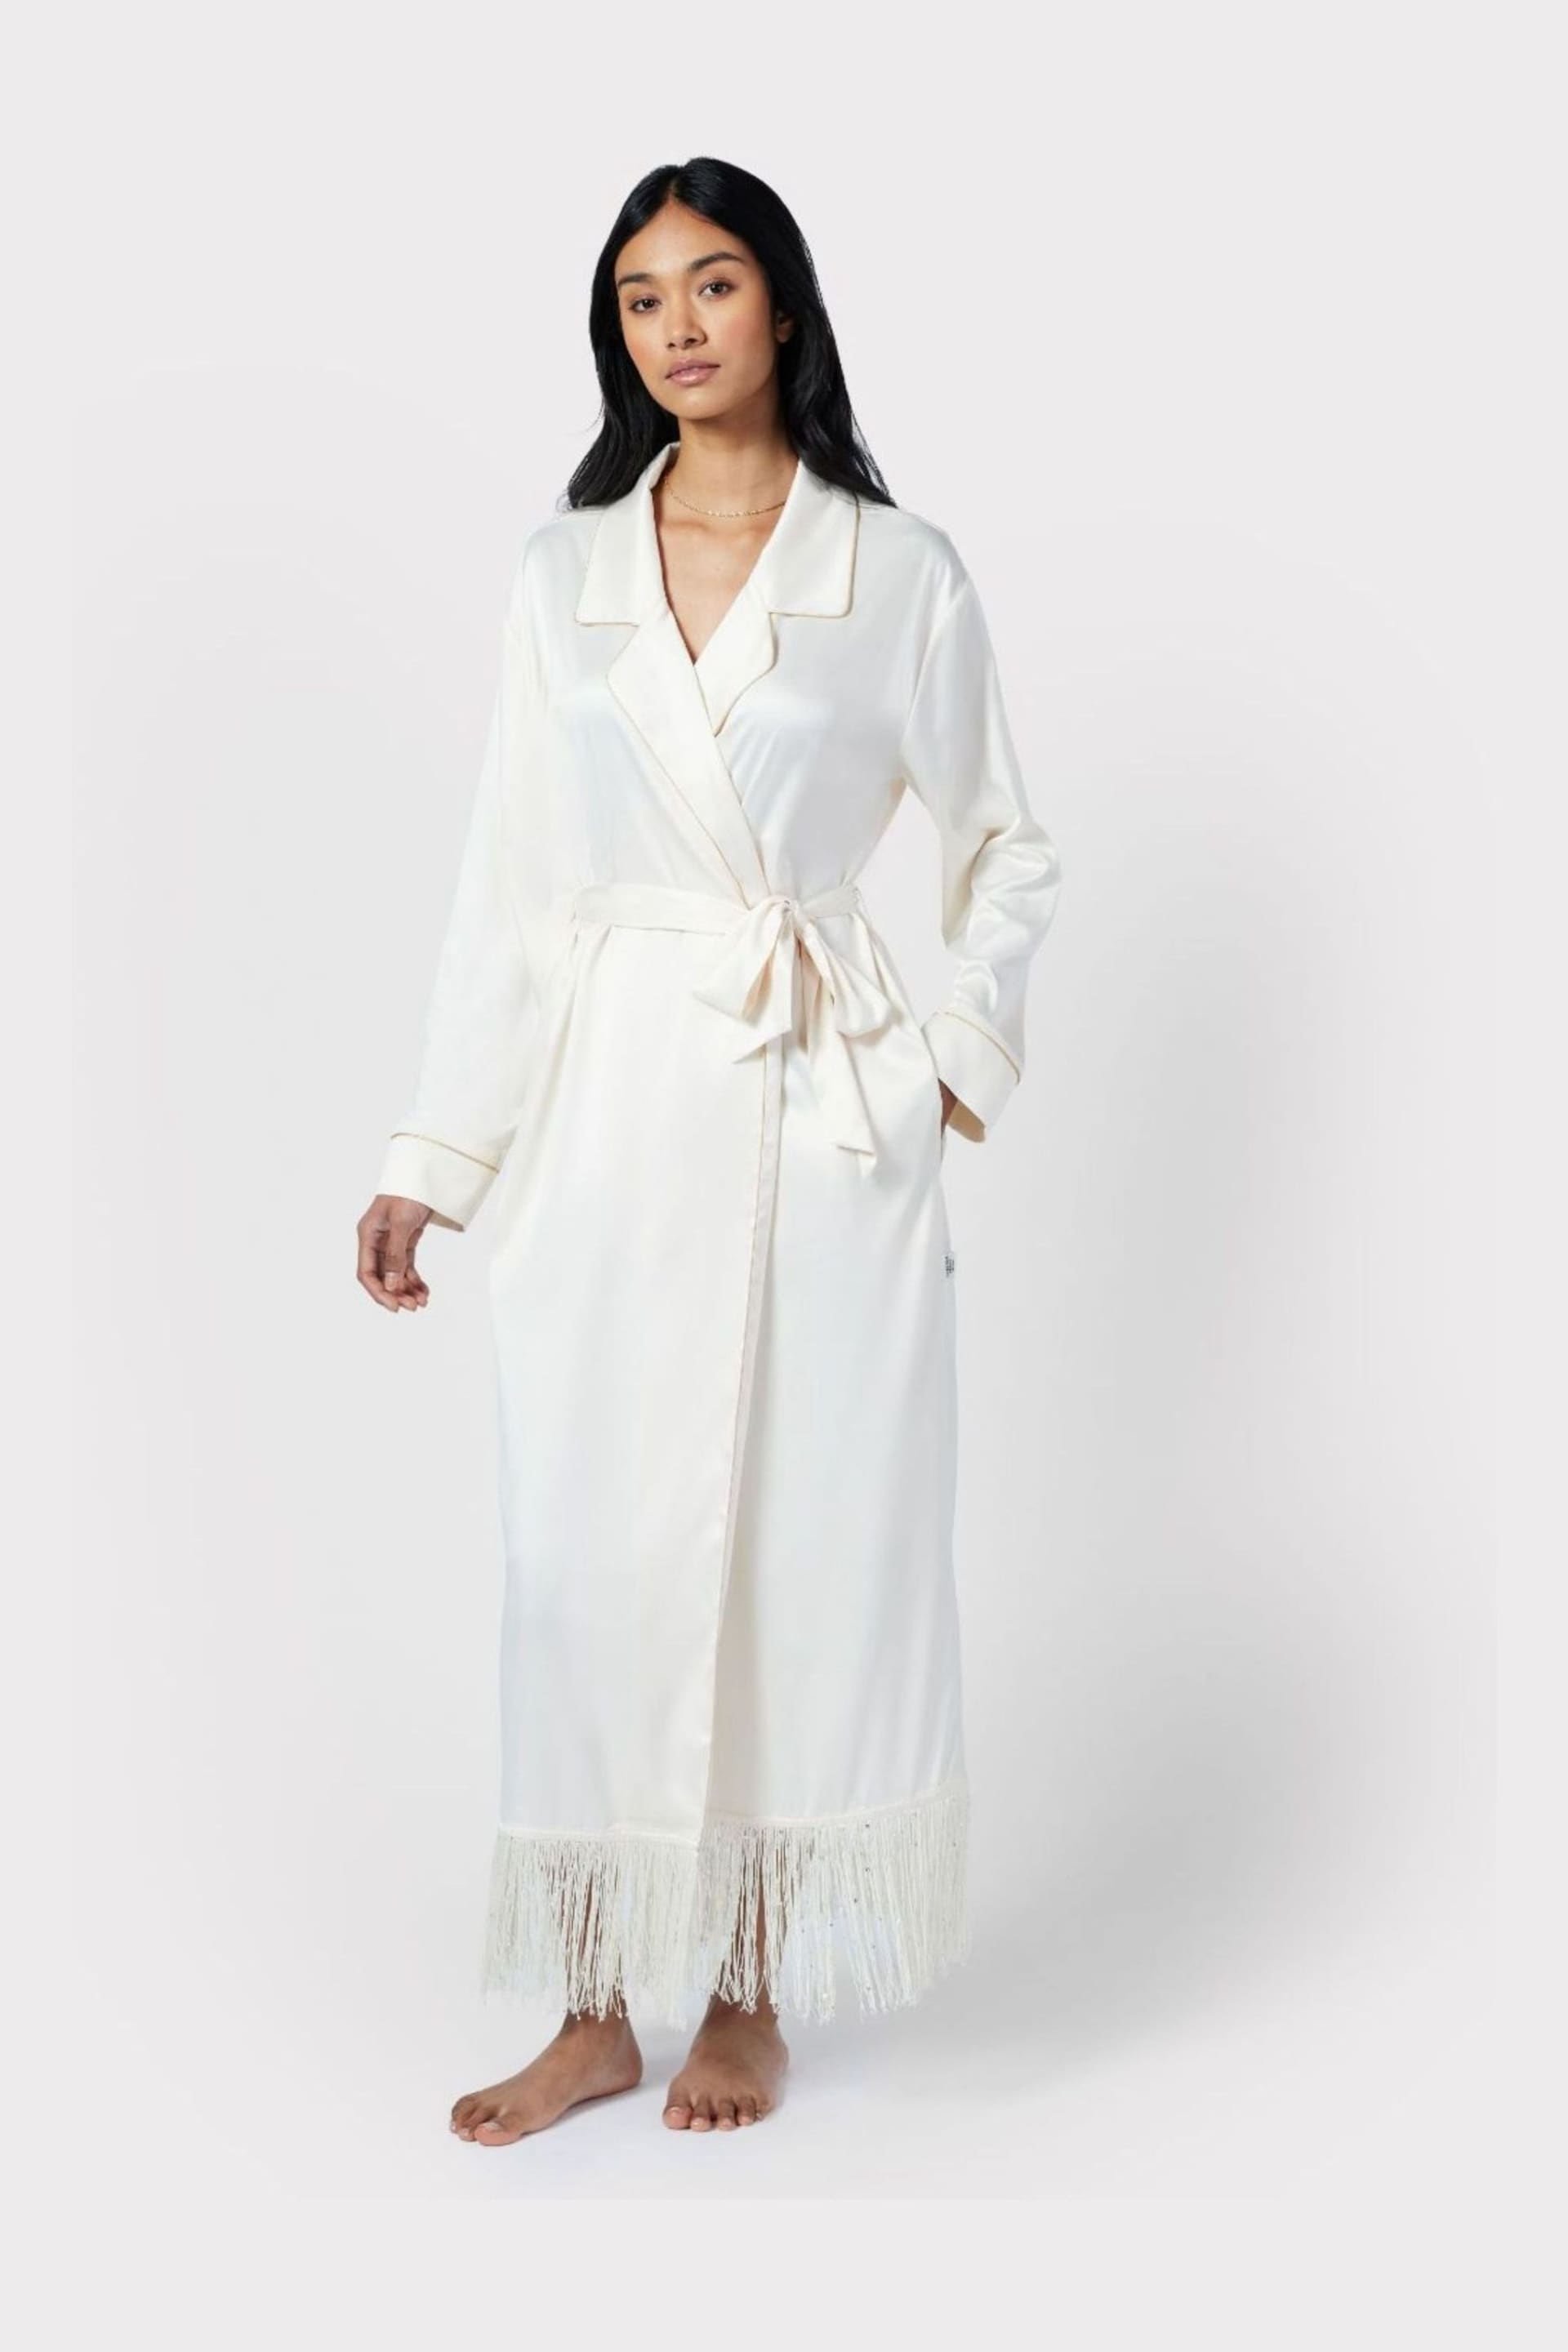 Chelsea Peers Cream Satin Fringe-Trim Dressing Gown - Image 1 of 5